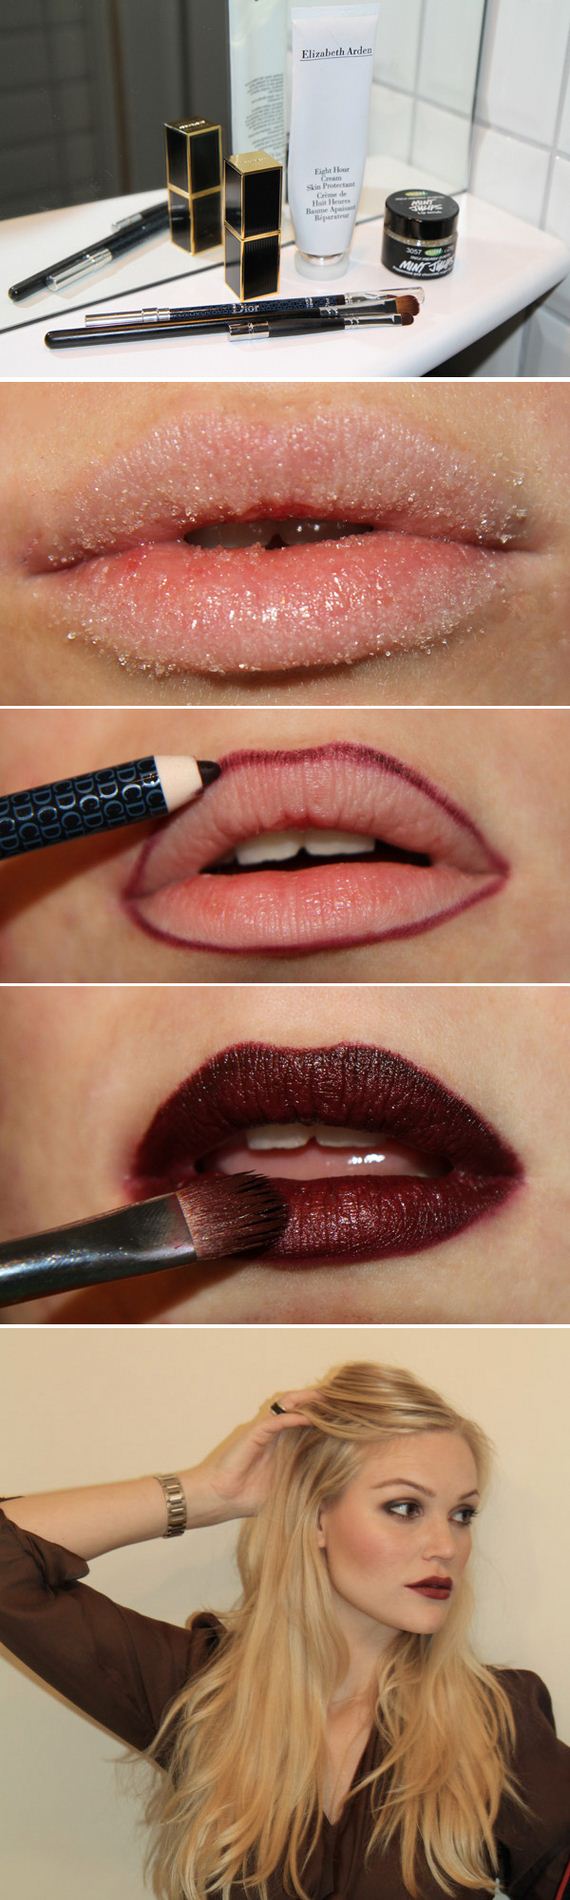 06-Lipstick-Tutorials